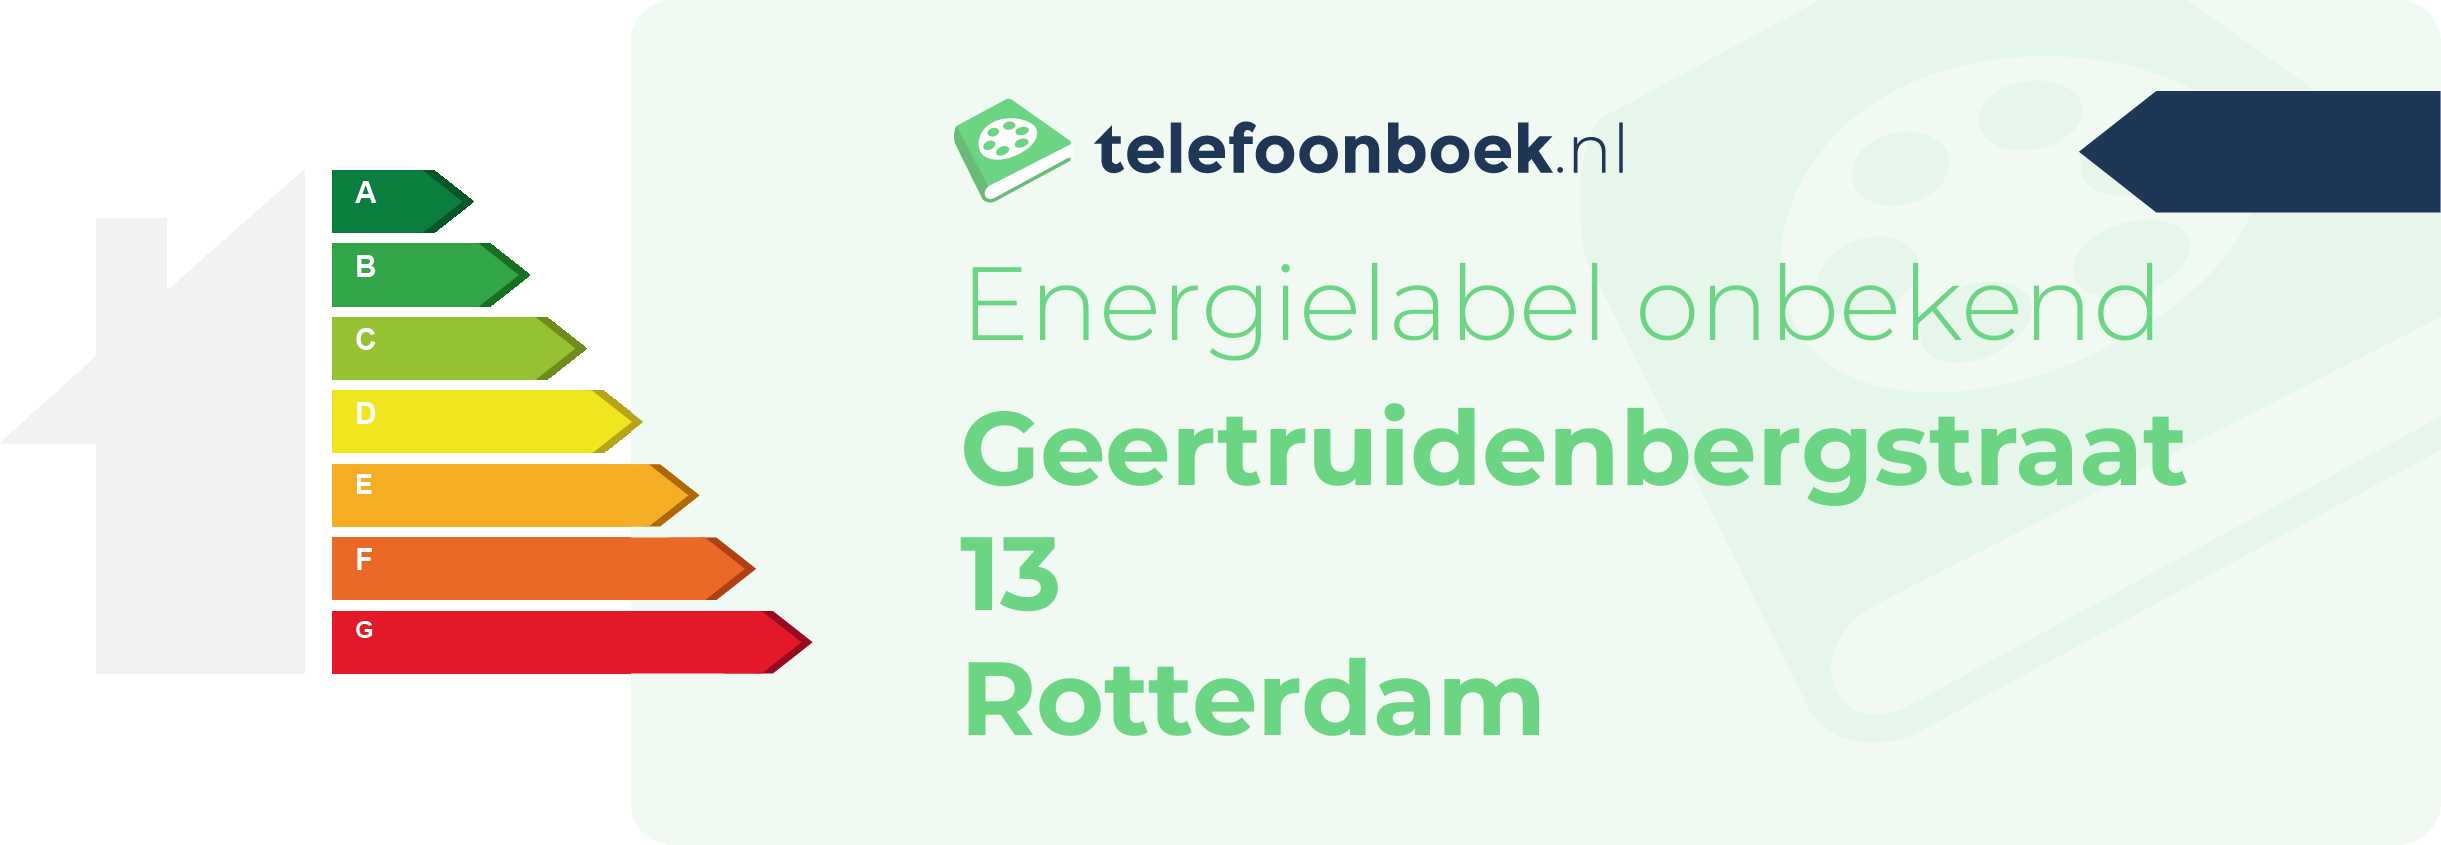 Energielabel Geertruidenbergstraat 13 Rotterdam